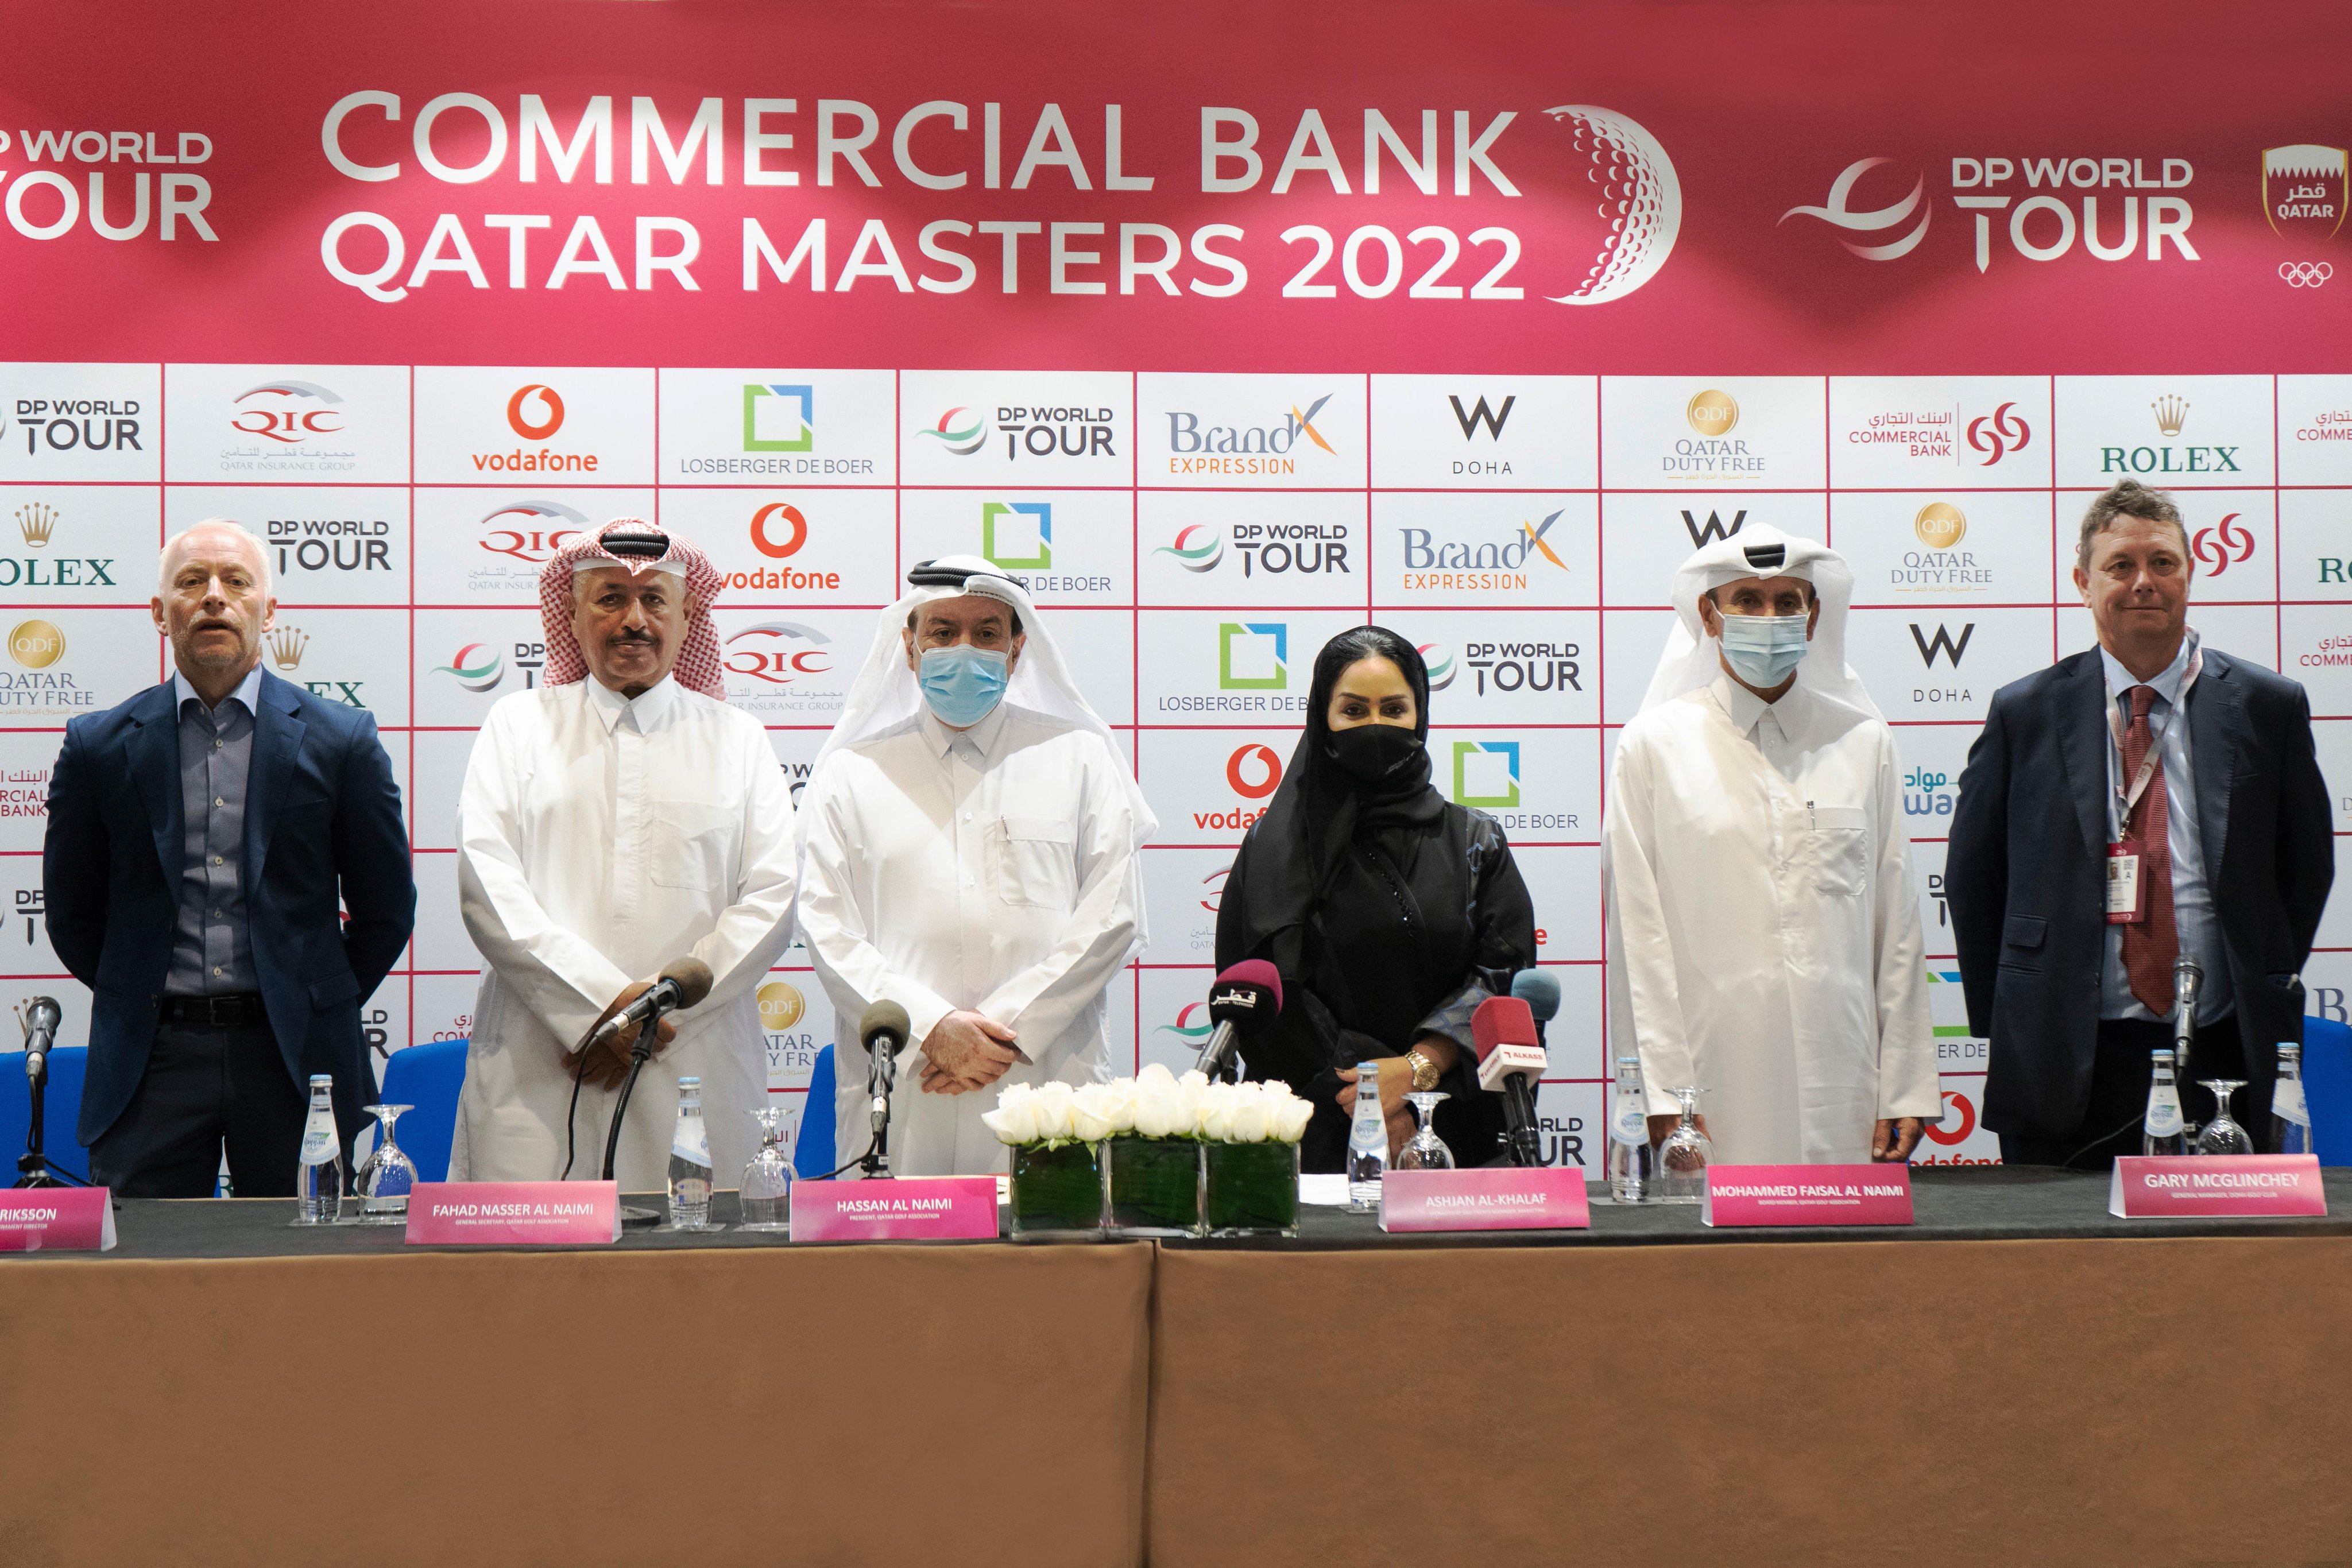 Qatar masters 2022